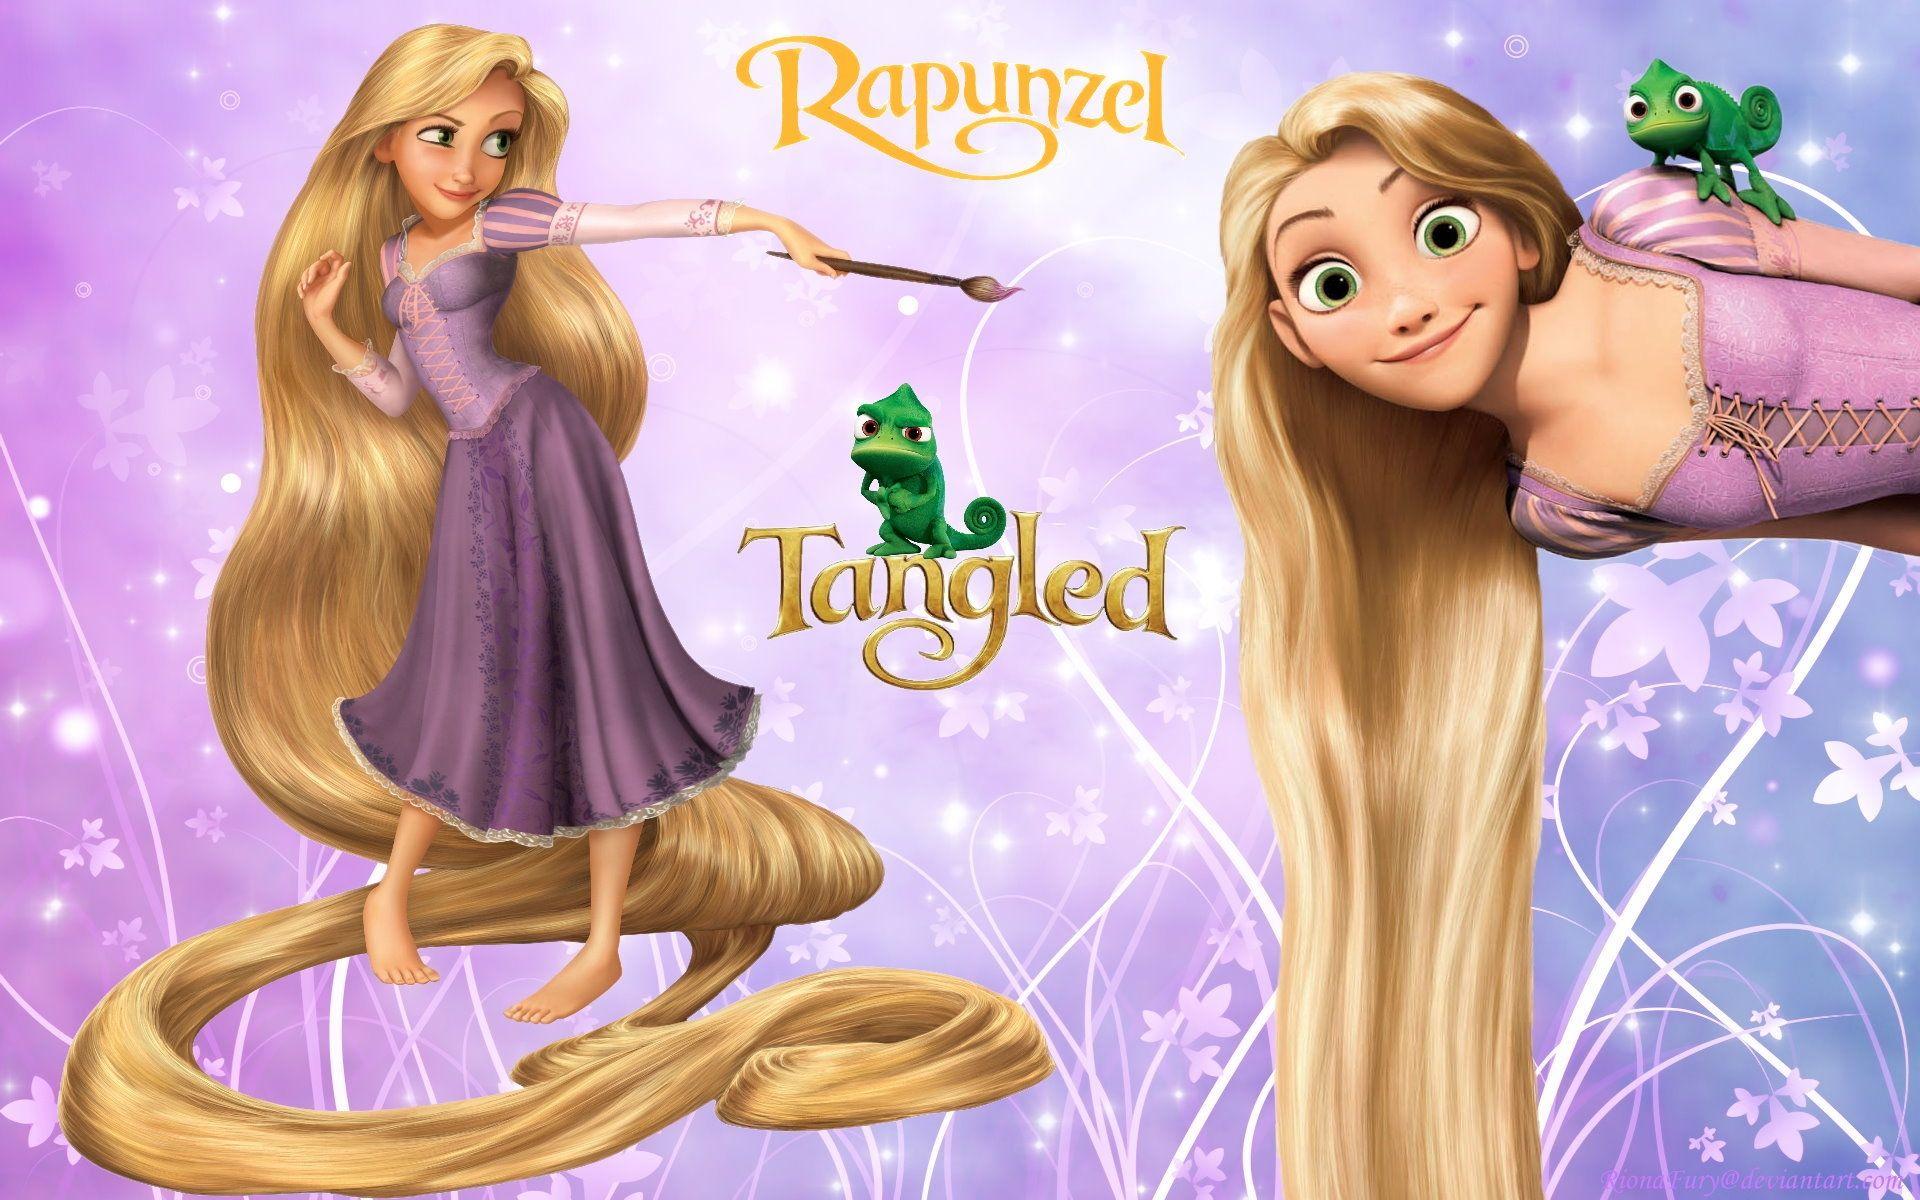 Disney Princess HD Wallpaper Free Download